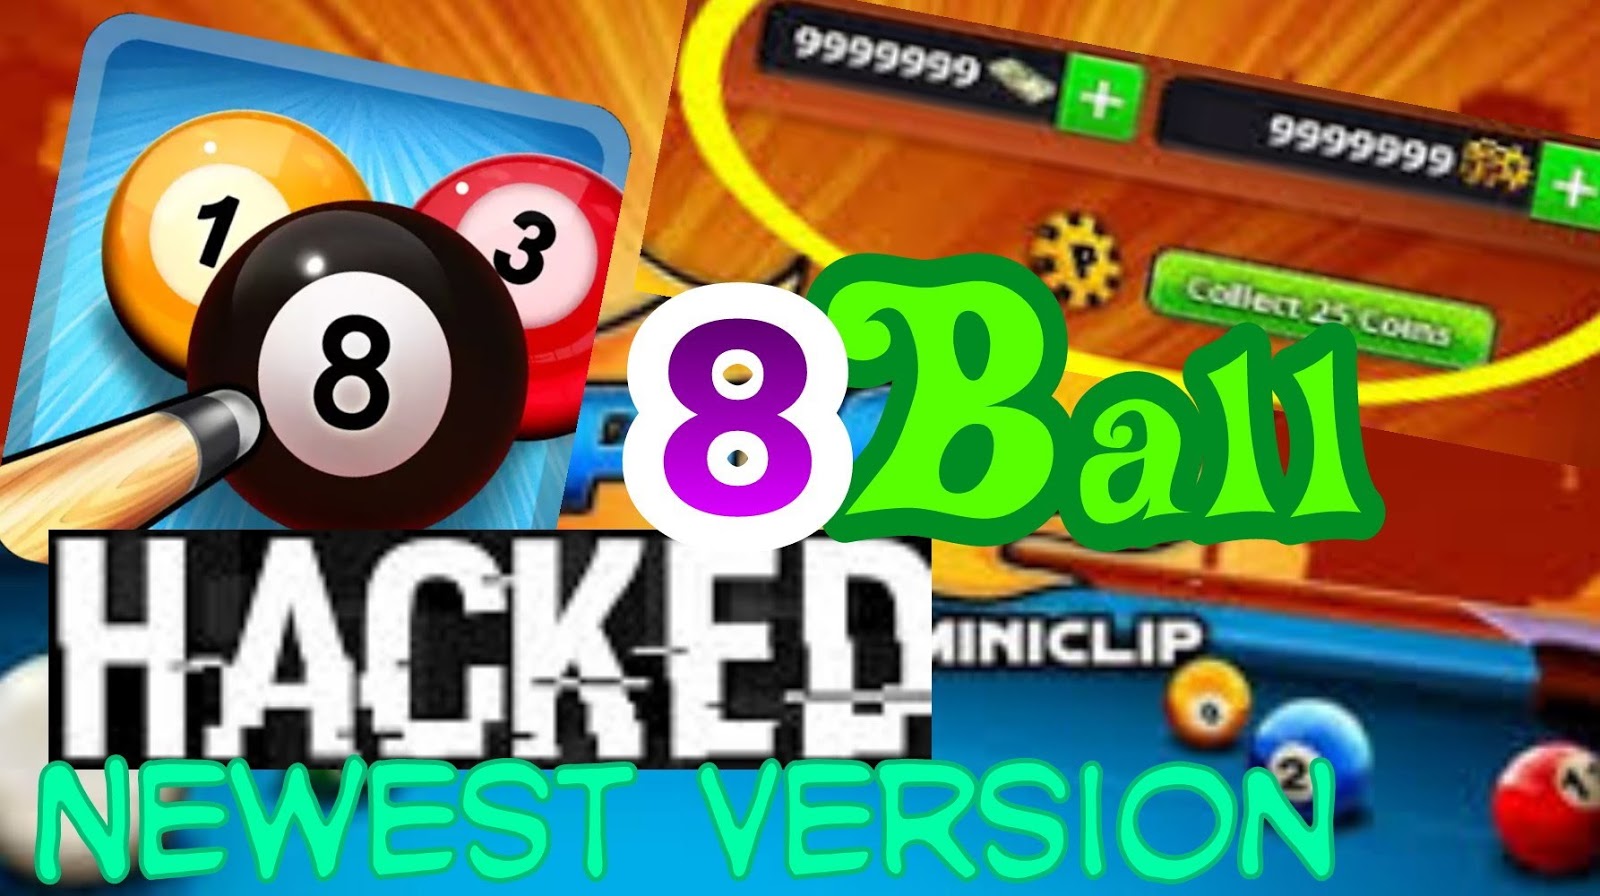 vopi.me/8ball 8 ball pool hack tool | Flob.fun/8ball 8 Ball ... - 